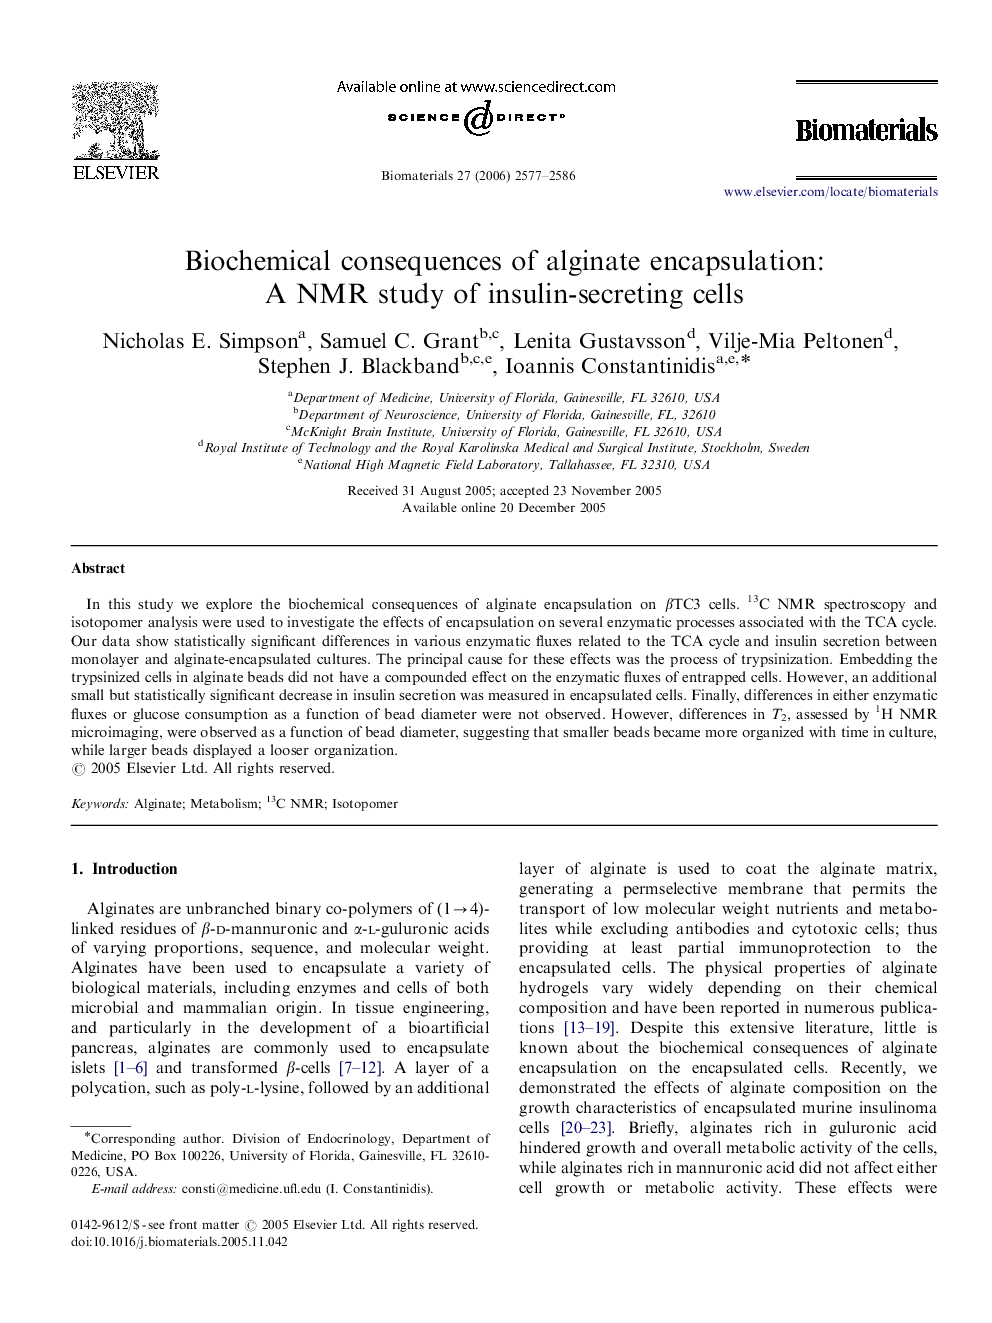 Biochemical consequences of alginate encapsulation: A NMR study of insulin-secreting cells